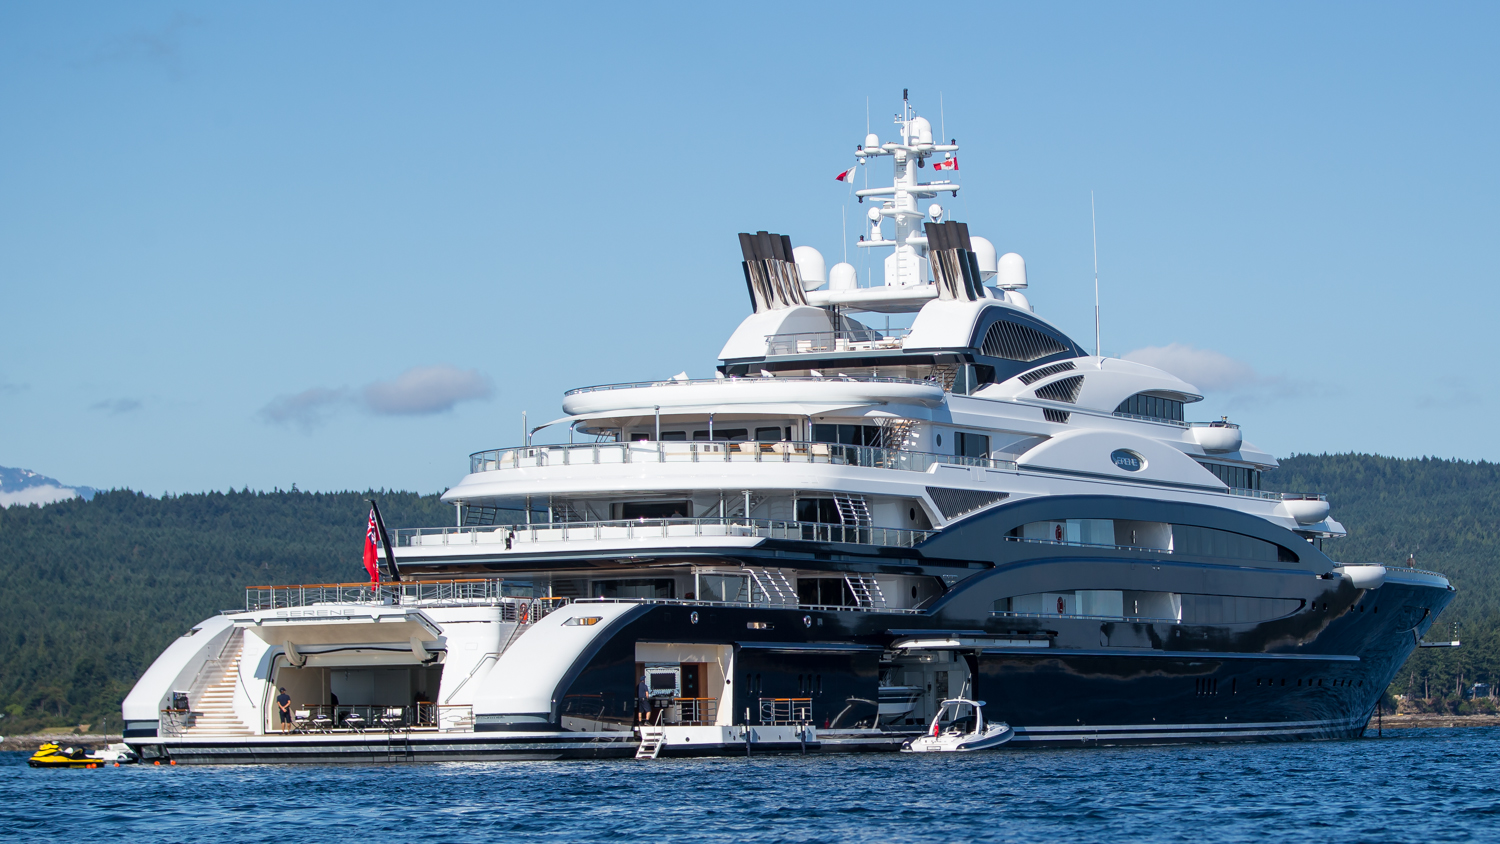 134m luxury mega yacht SERENE - Photo by Viktor Davare - Vancouver Island Photography